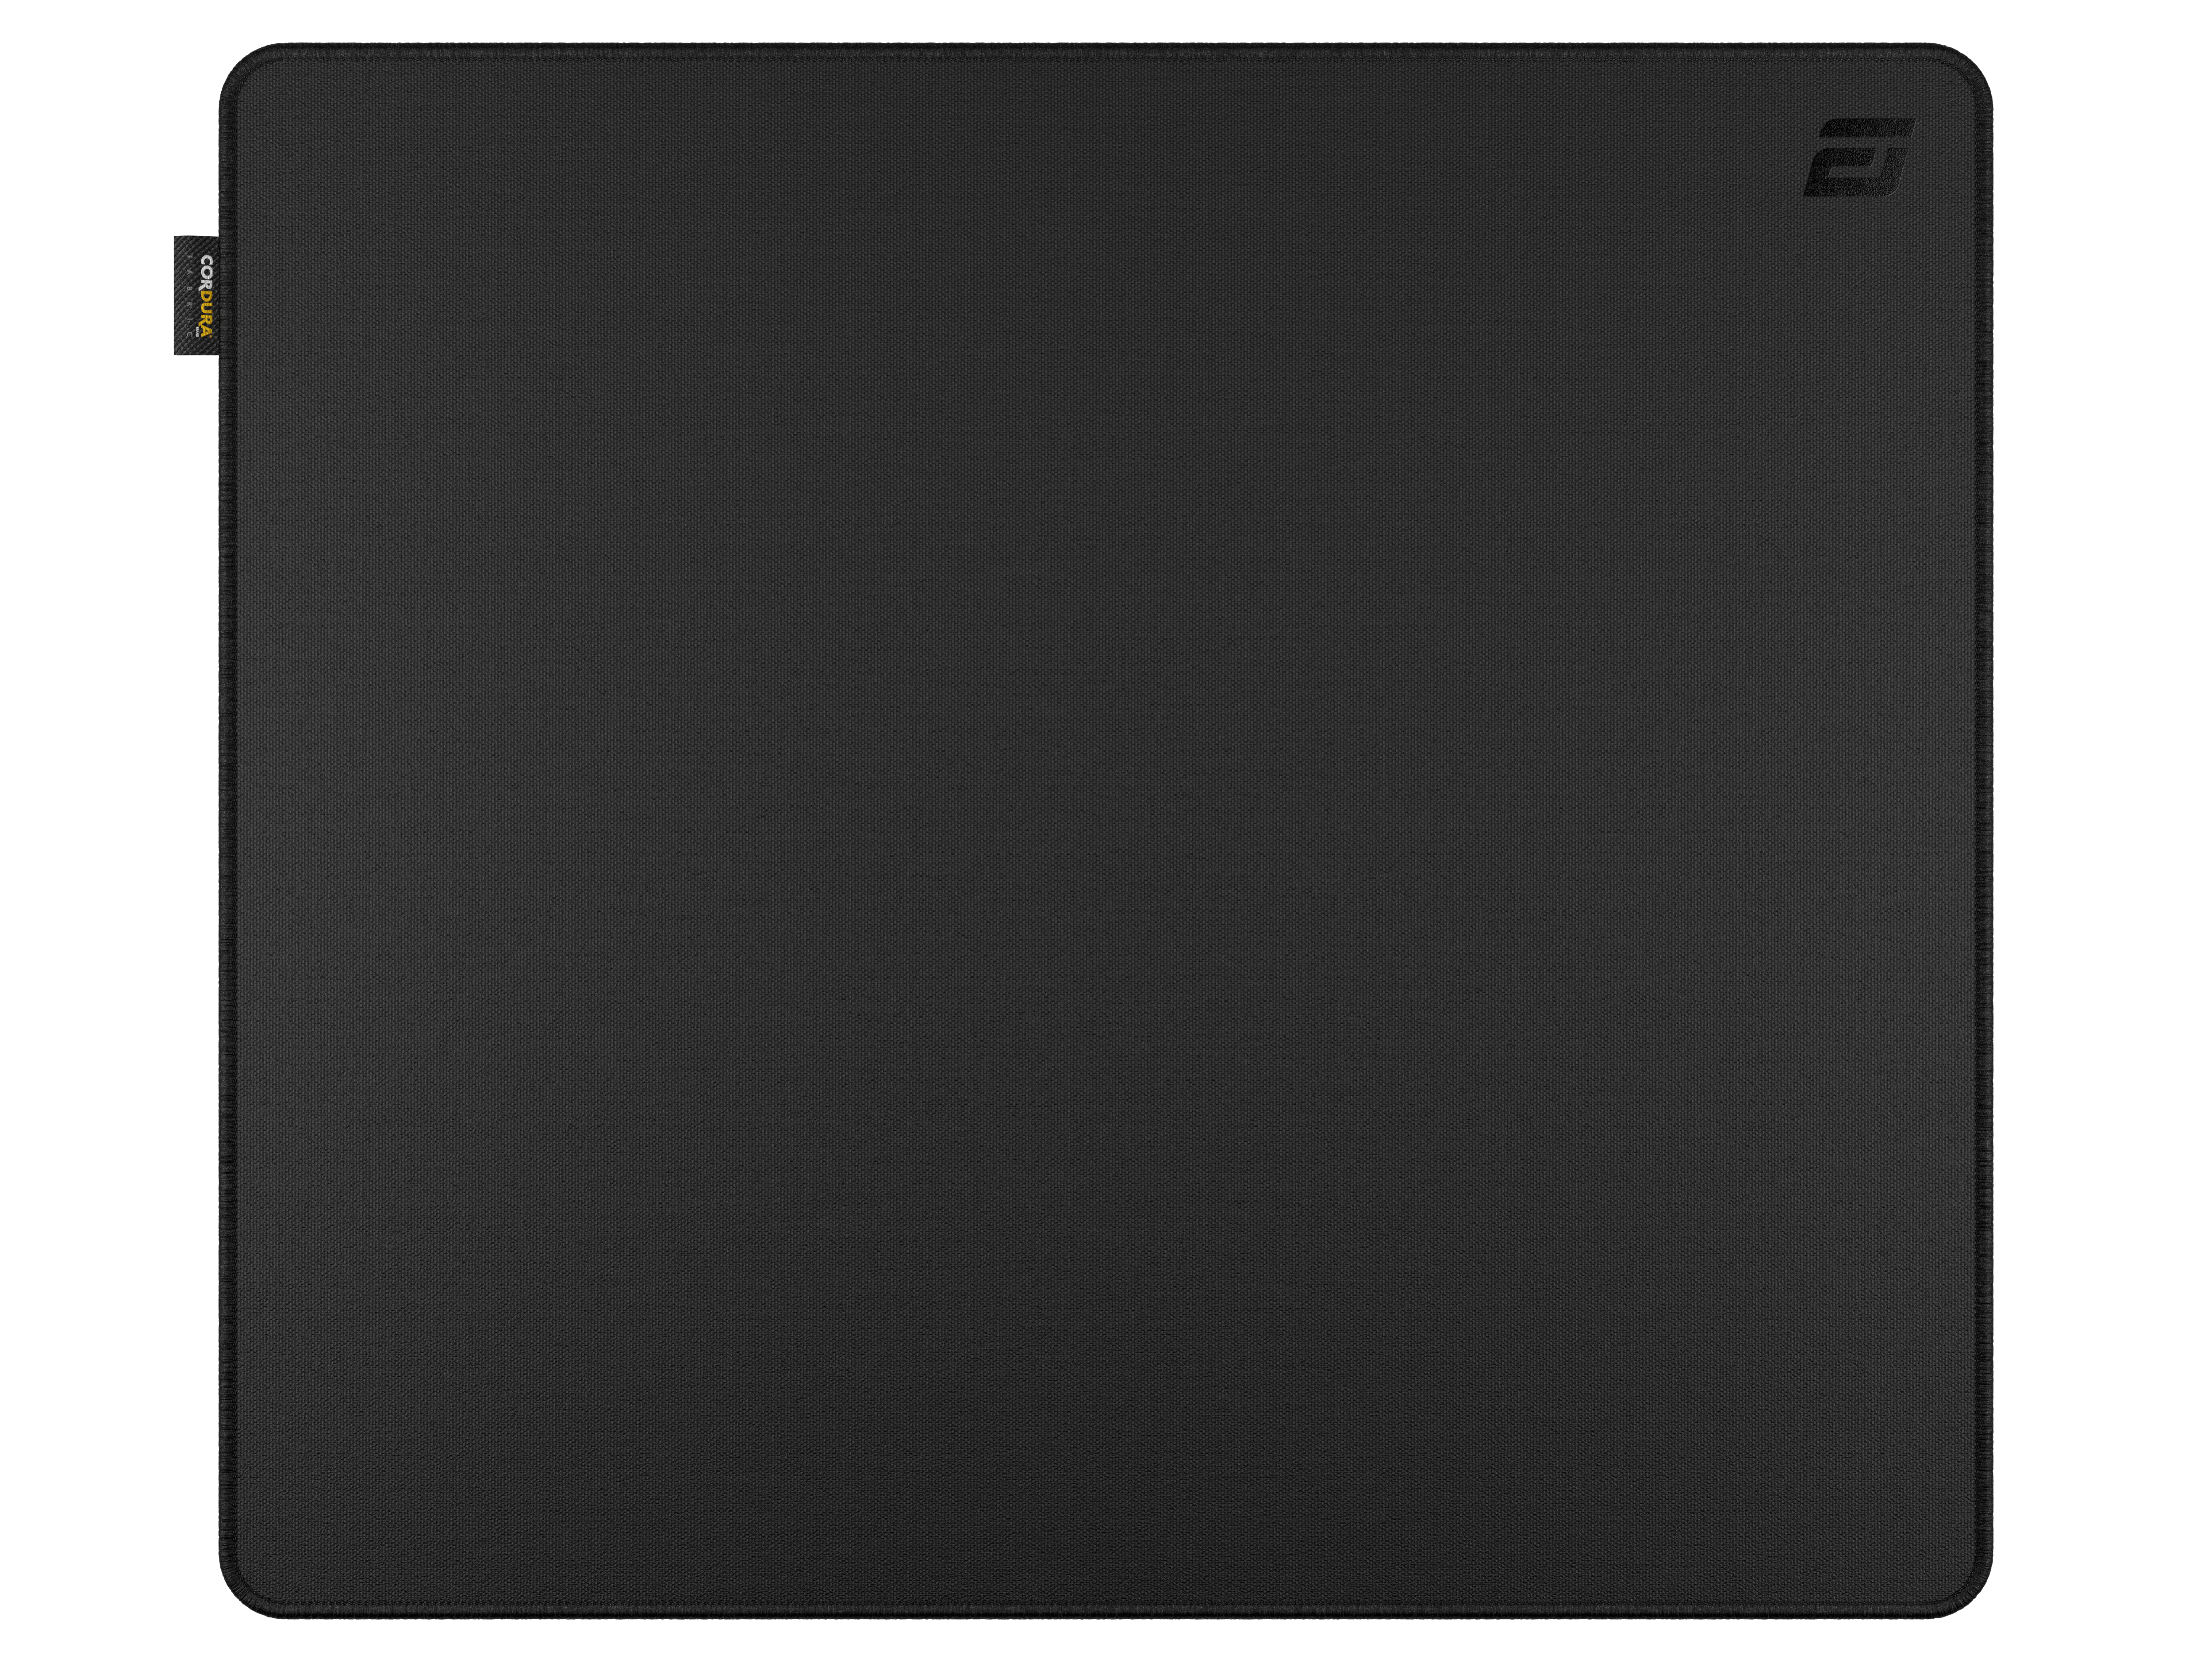 Endgamegear - MPC450 CORDURA® Pelihiirimatto  STEALTH EDITION